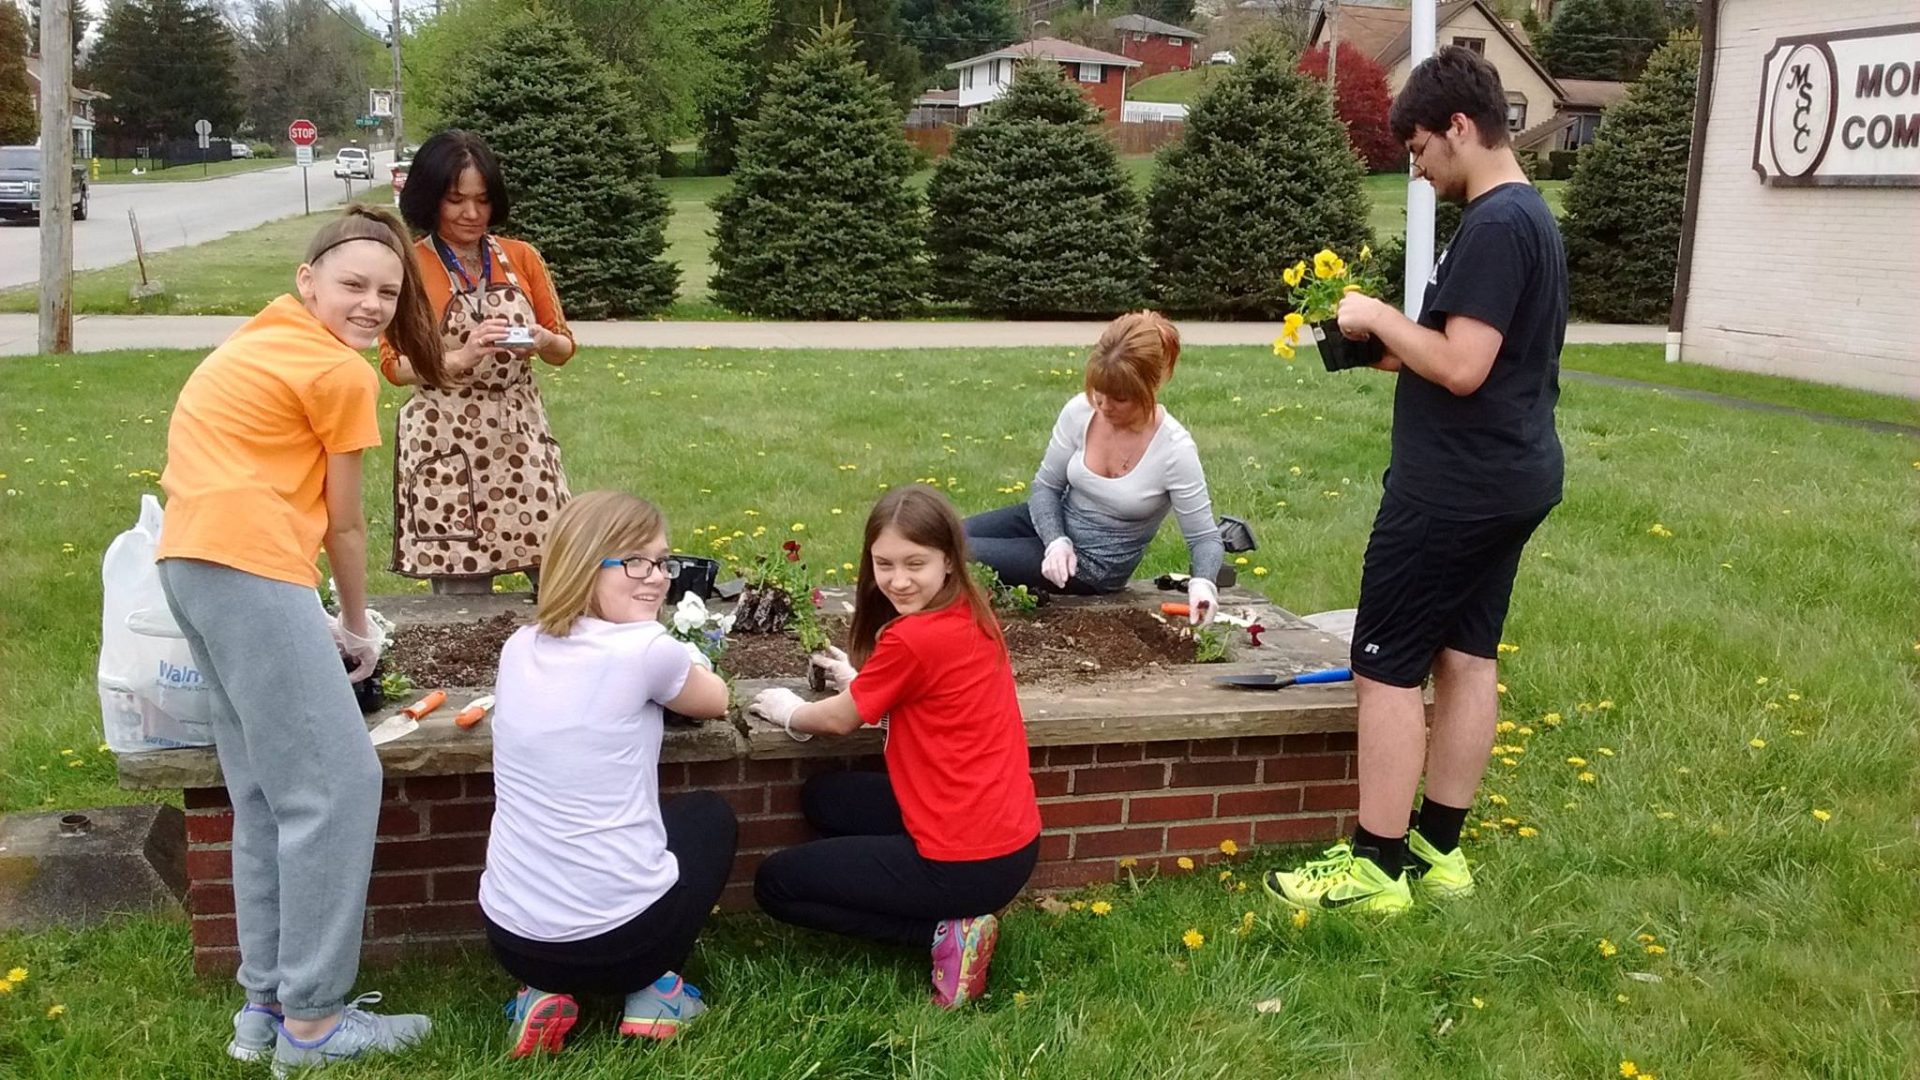 Some St. Sebastian Students planting flowers at the Monessen Senior Community Center​​​
